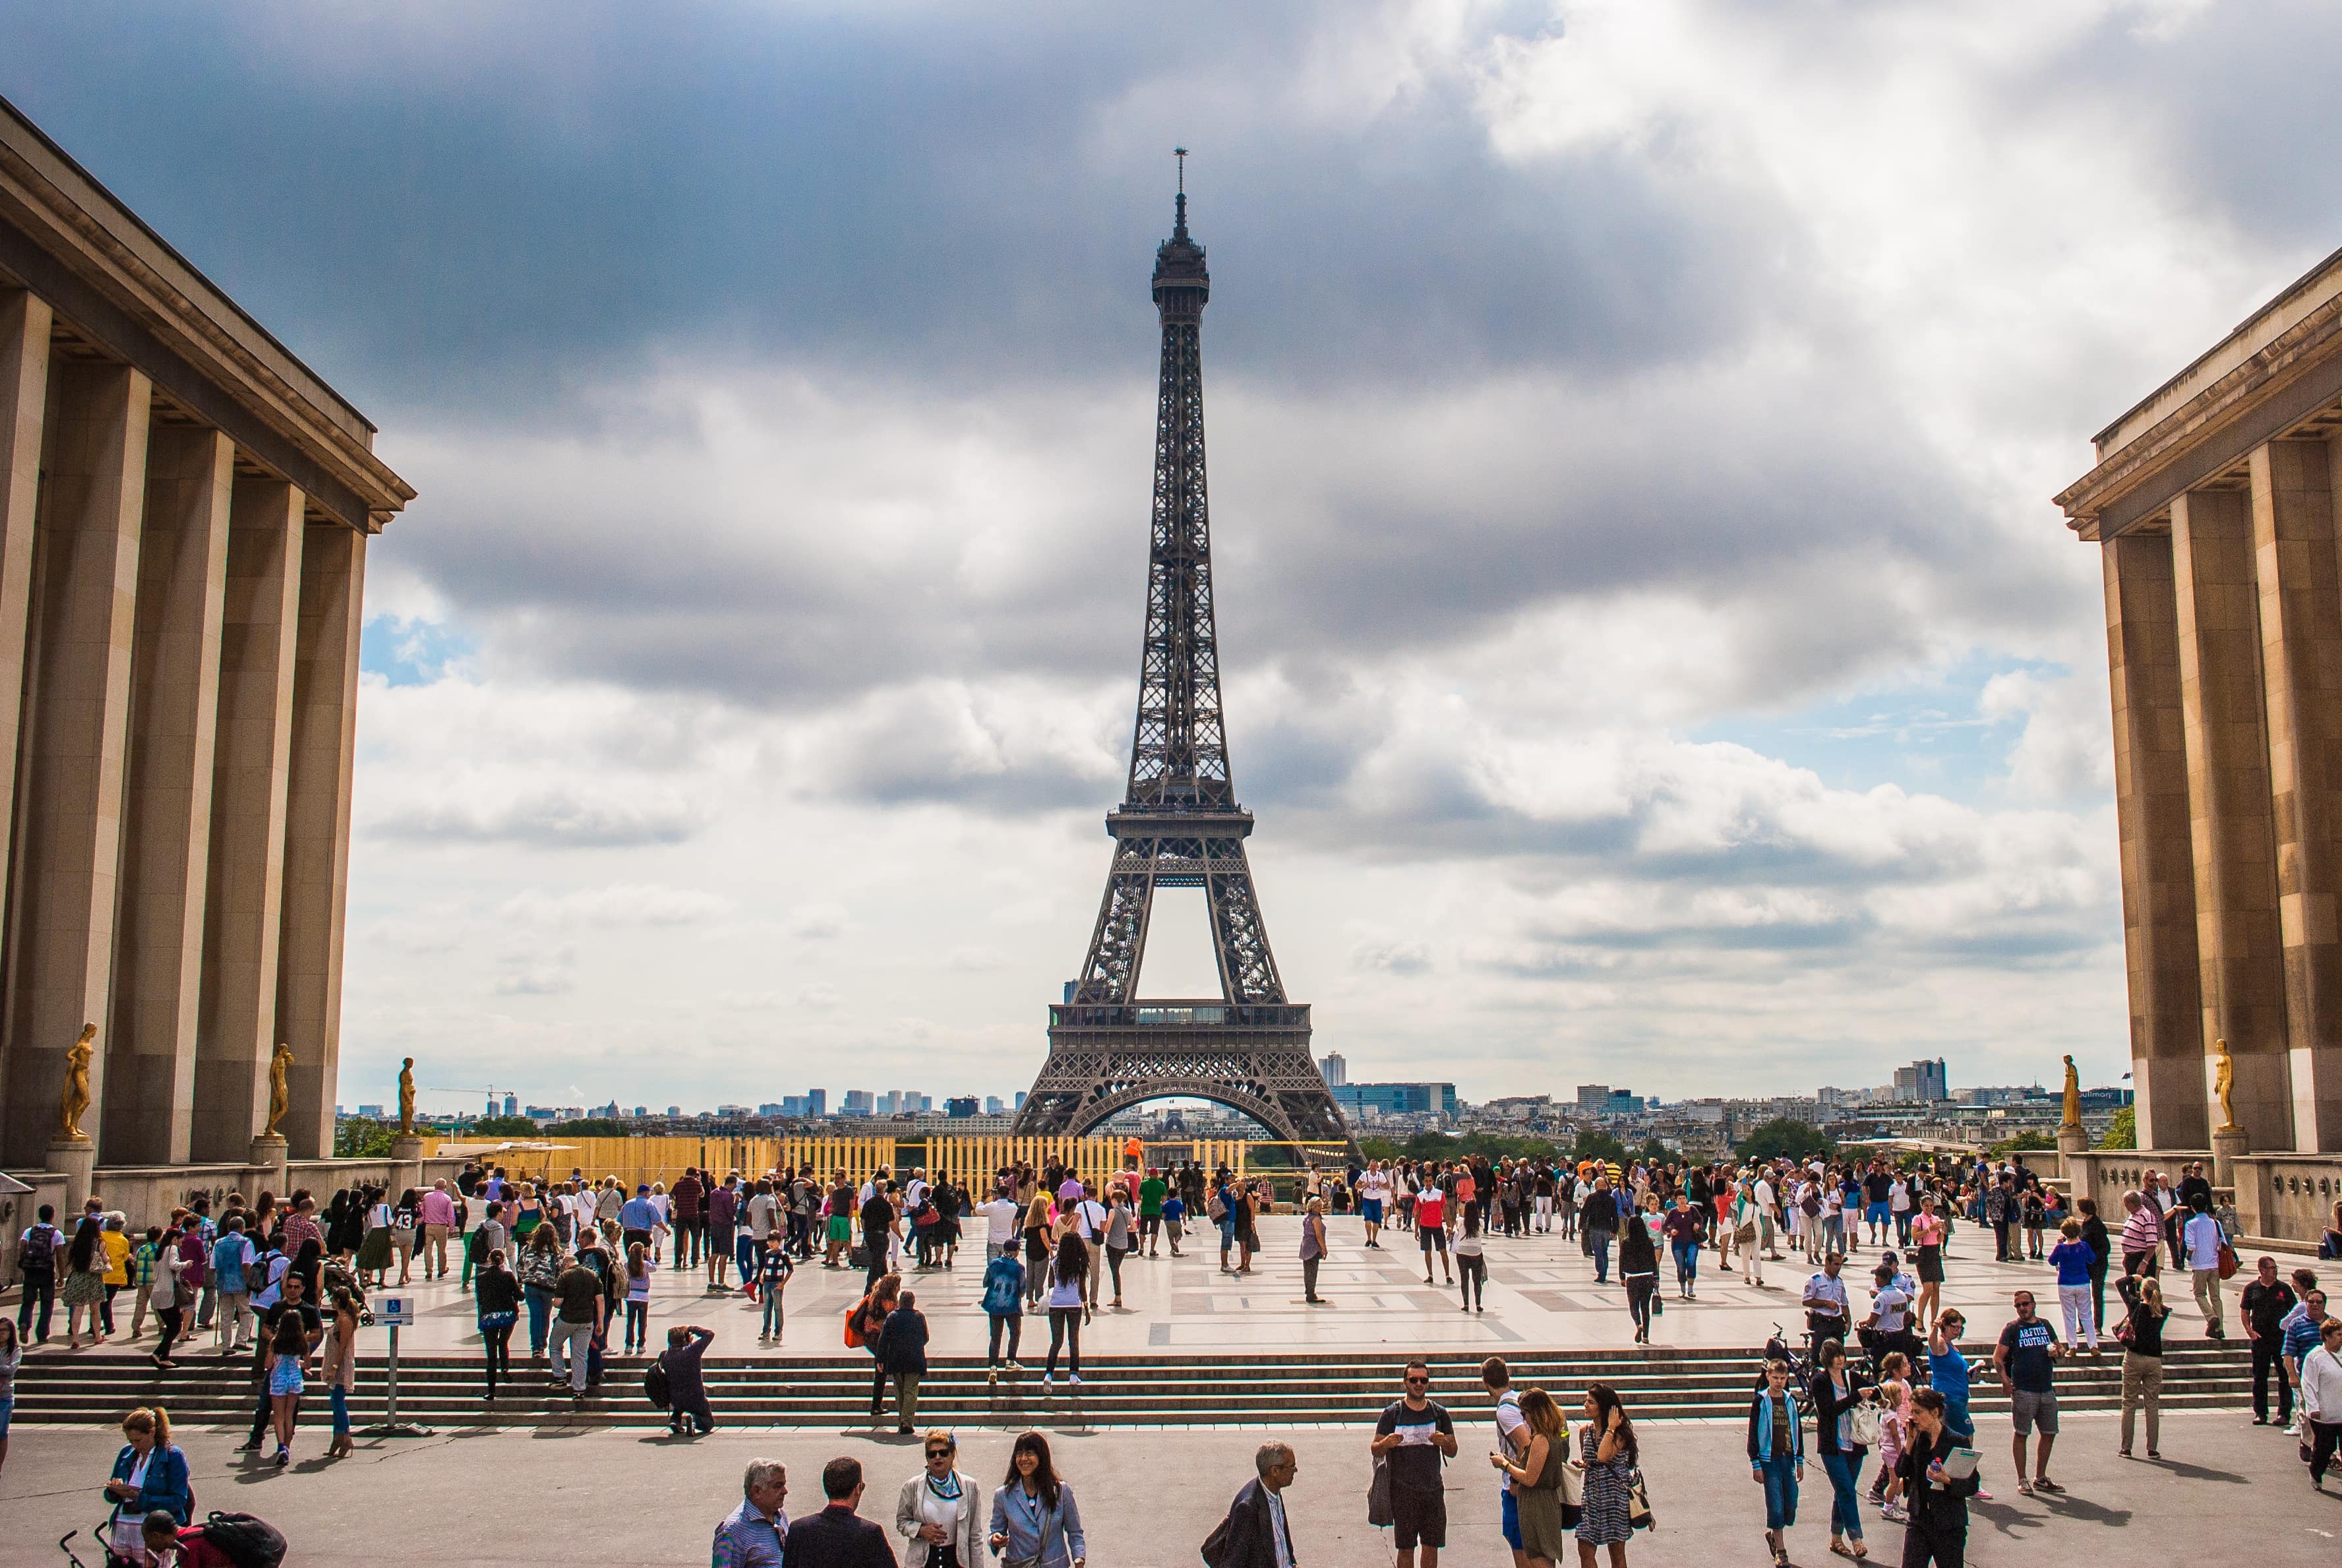 A Paris city break offers plenty of spots to indulge in people-watching